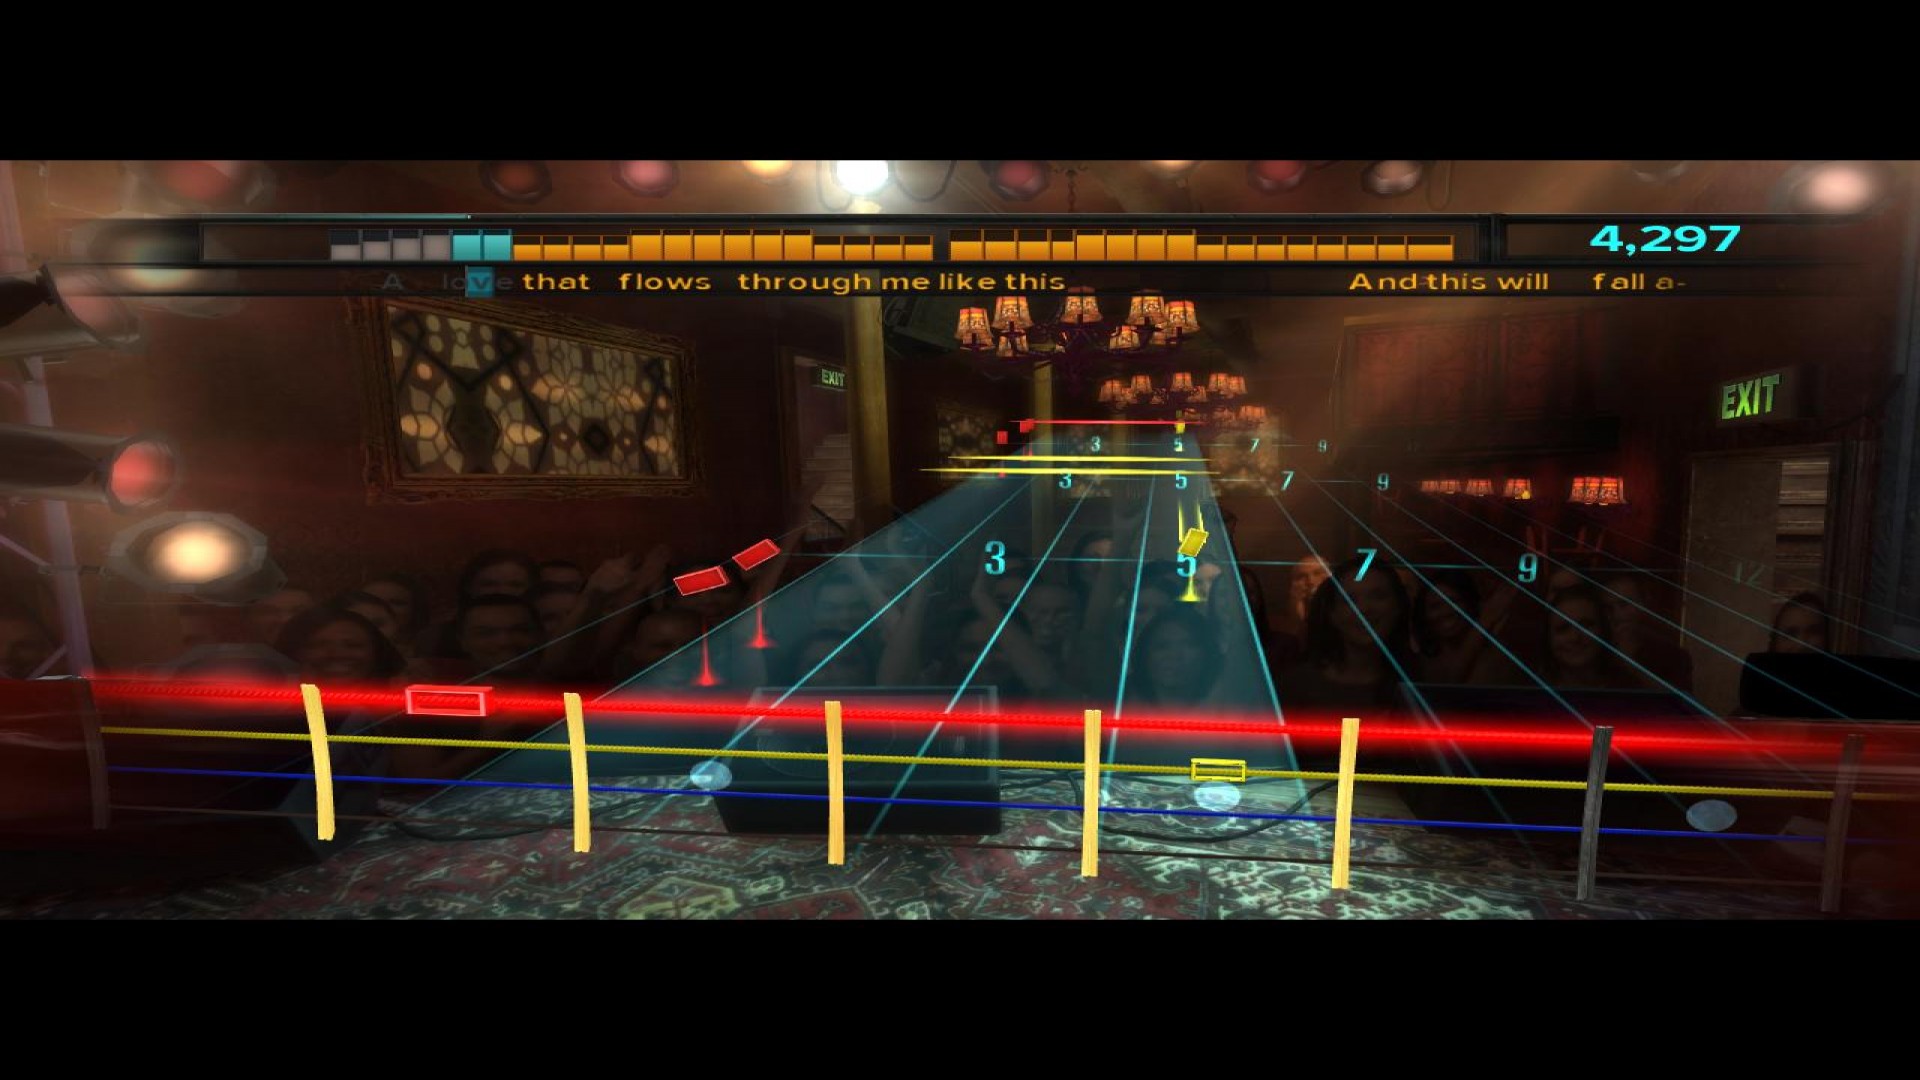 Rocksmith - 3 Doors Down - Loser screenshot